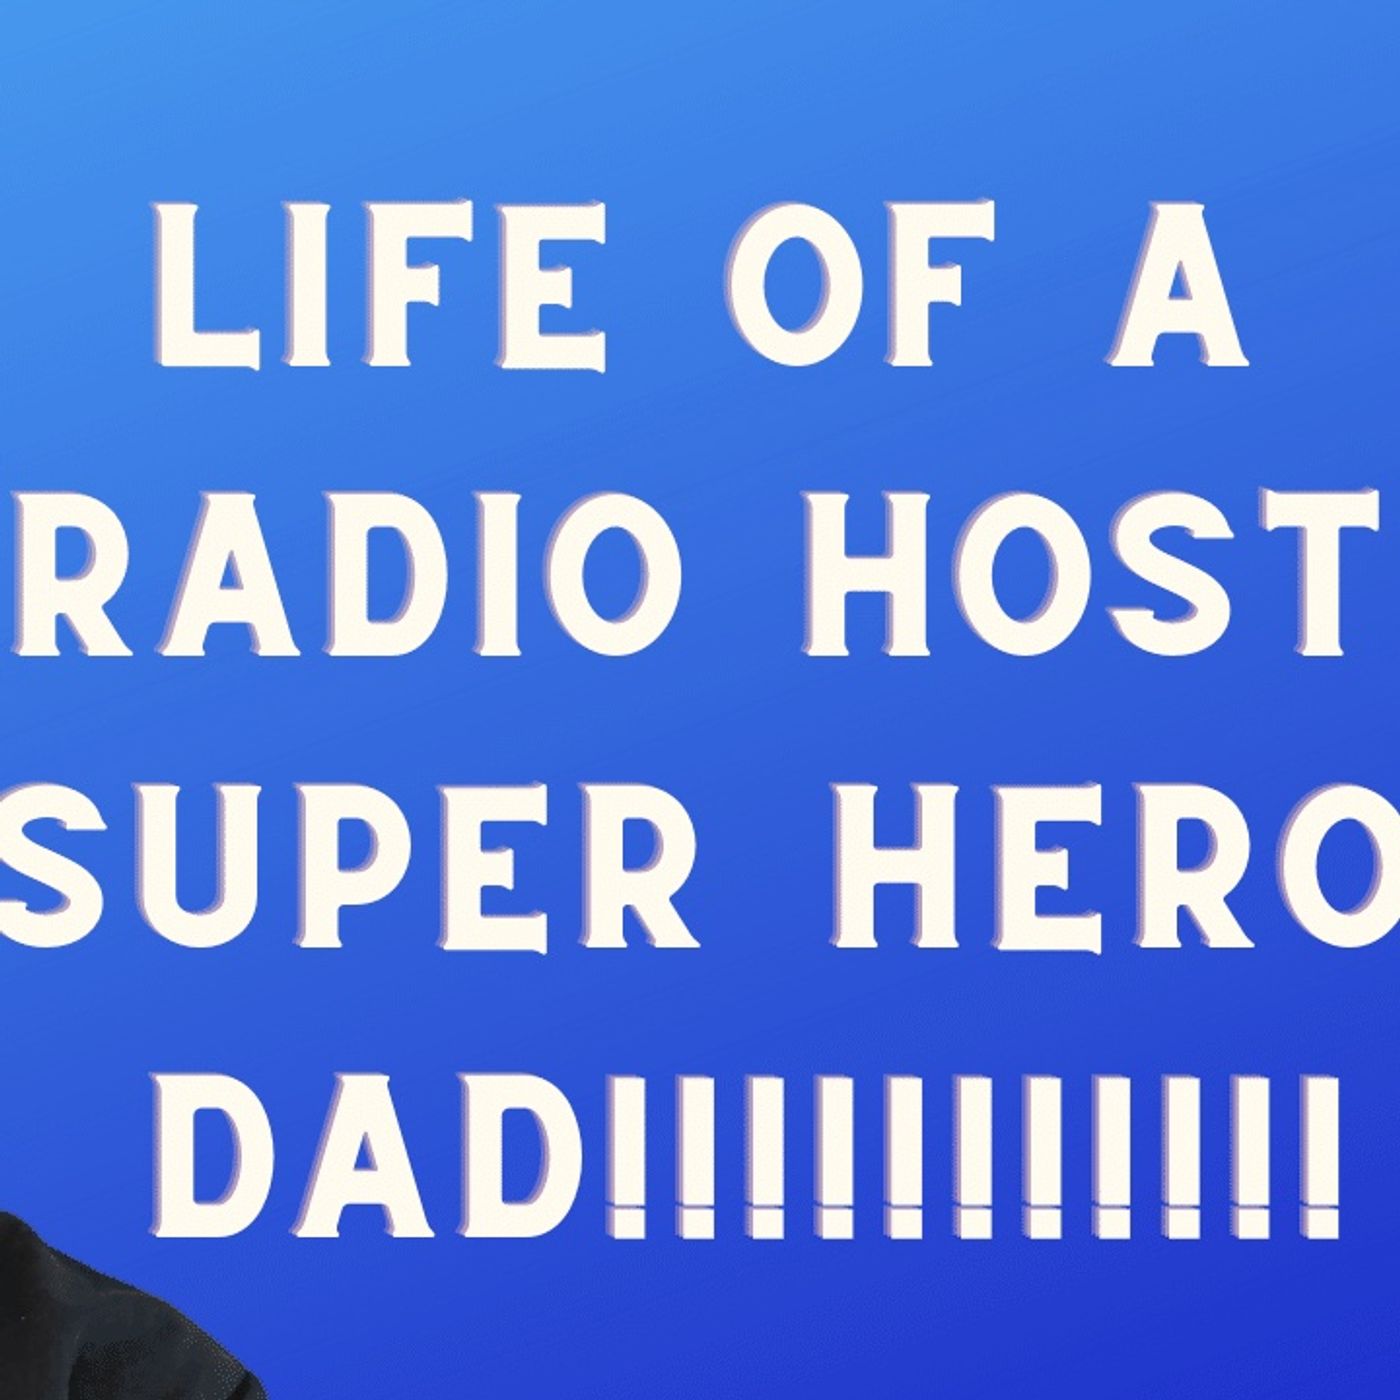 Life of a radio host super hero dad